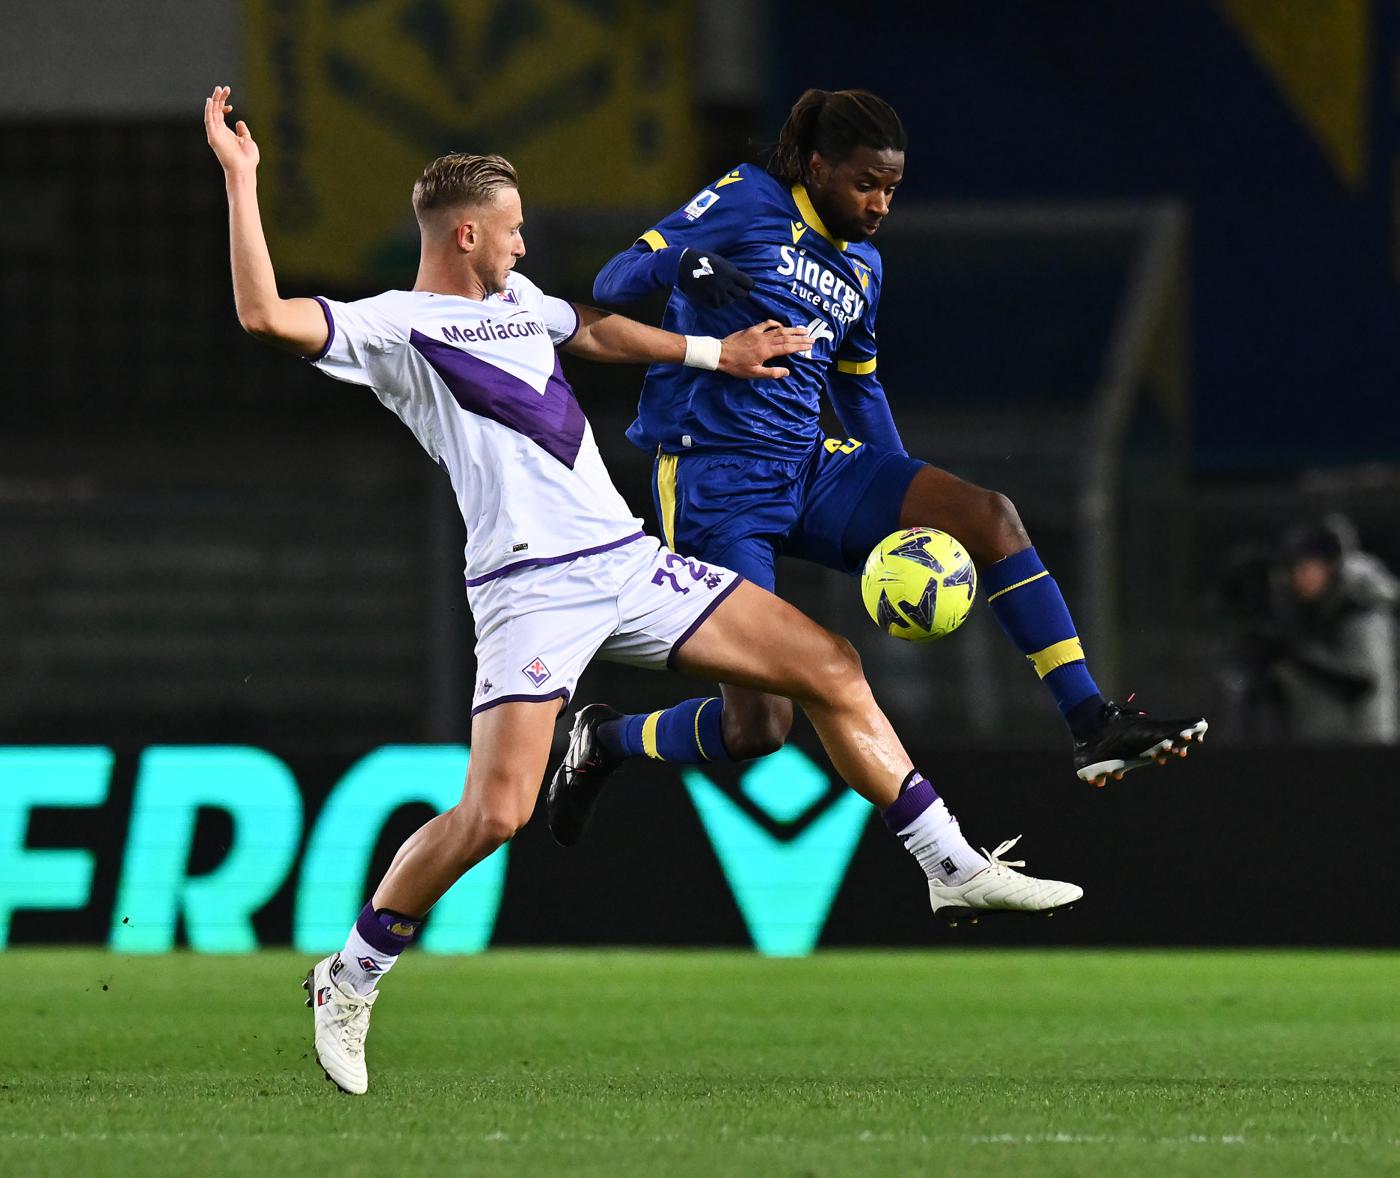 Verona - Fiorentina - 0:3. Italian Championship, round 24. Match review, statistics.